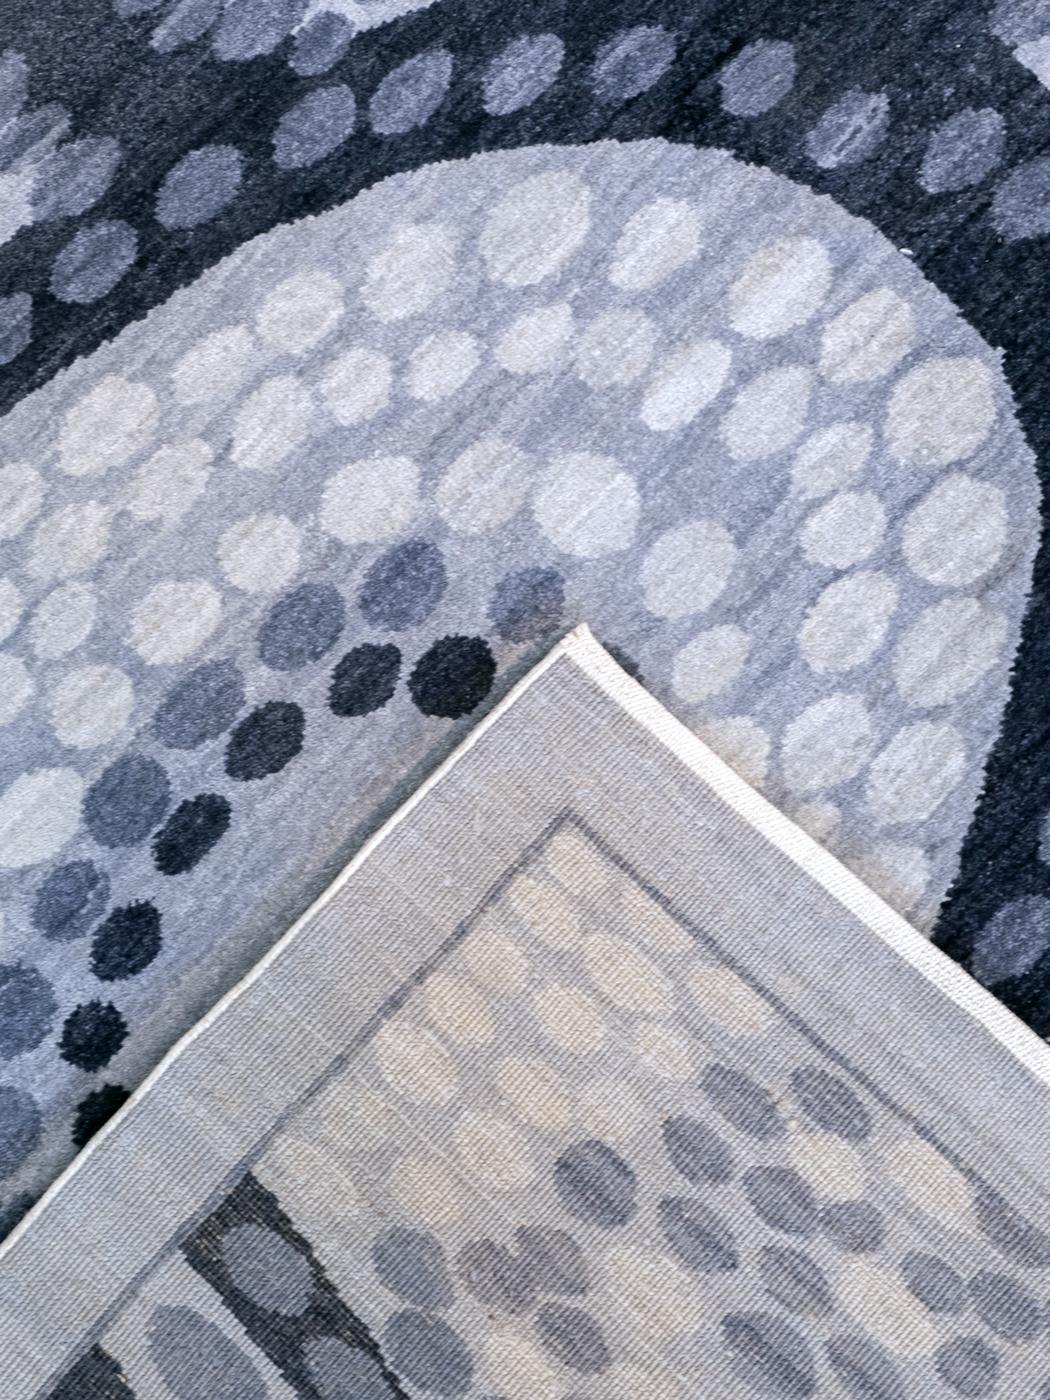 Orley Shabahang Signature “Badu” Gray on Grey Contemporary Persian Carpet For Sale 1